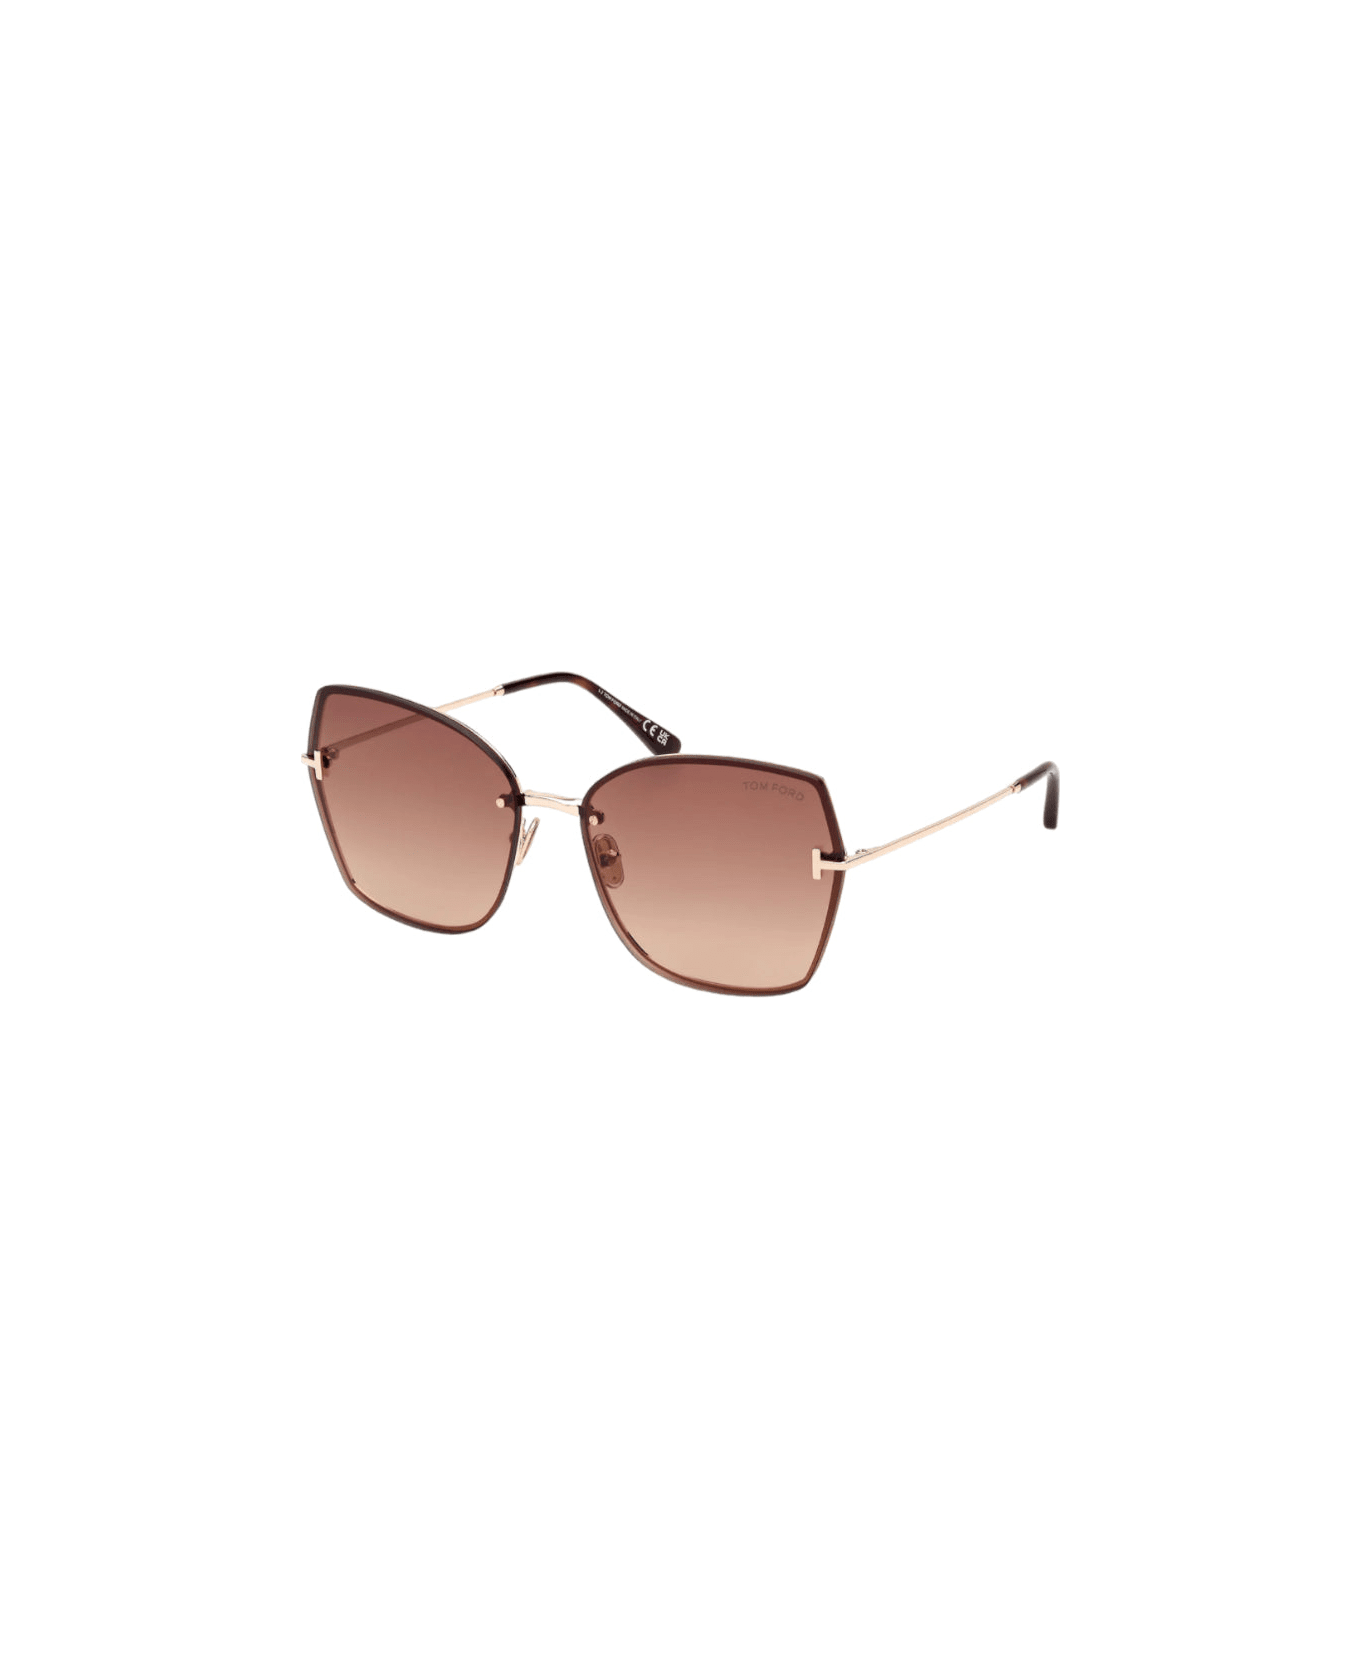 Tom Ford Eyewear Nickie - Ft 1107 /s Sunglasses サングラス